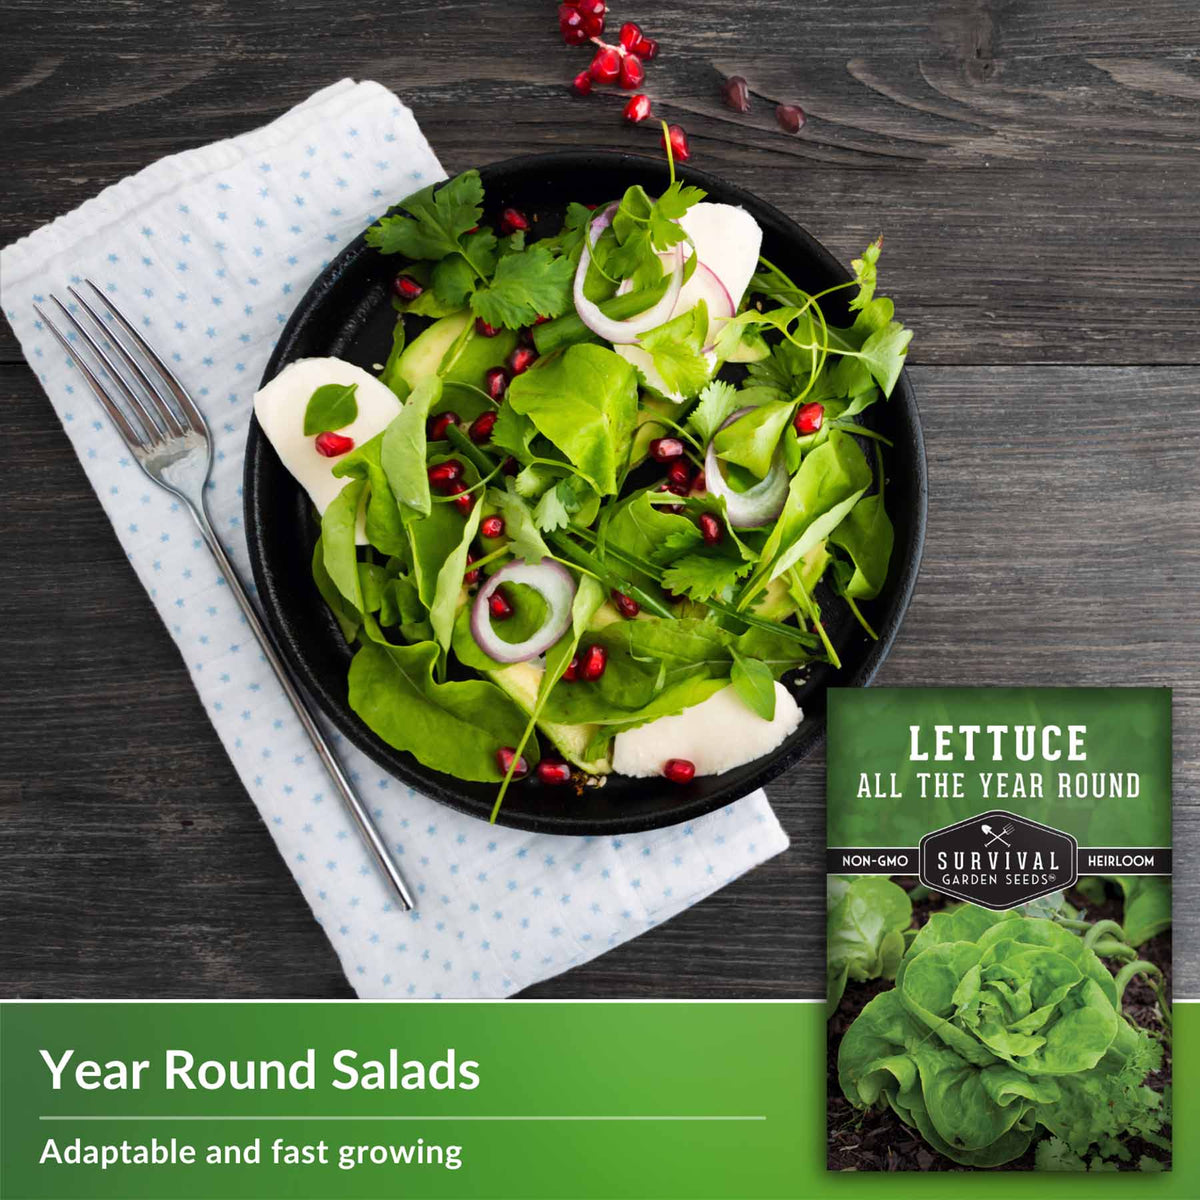 Year round salads